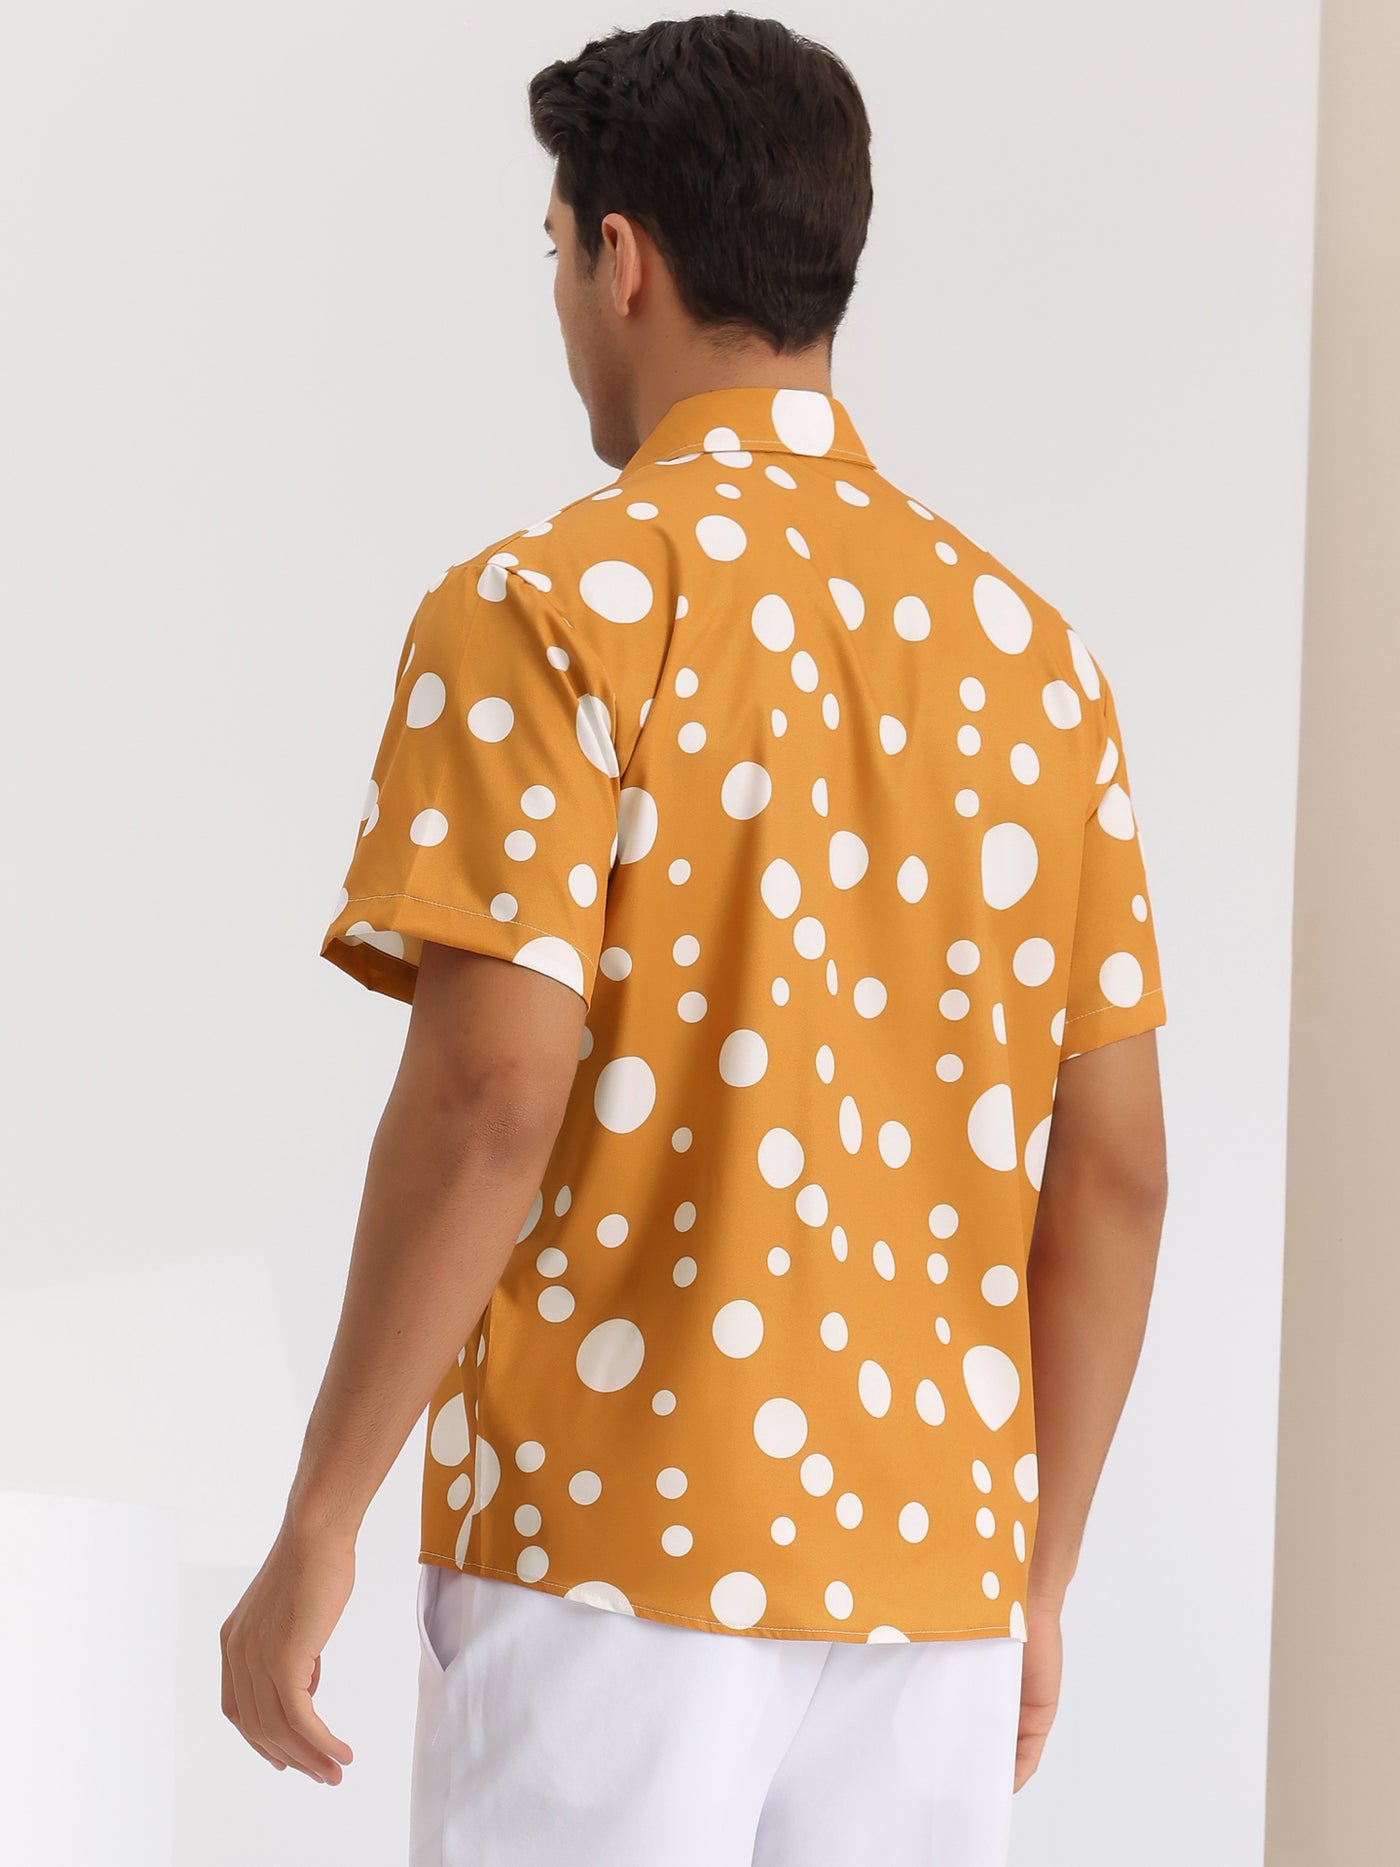 Bublédon Polka Dots Shirts for Men's Summer Contrasting Color Short Sleeves Button Down Shirt